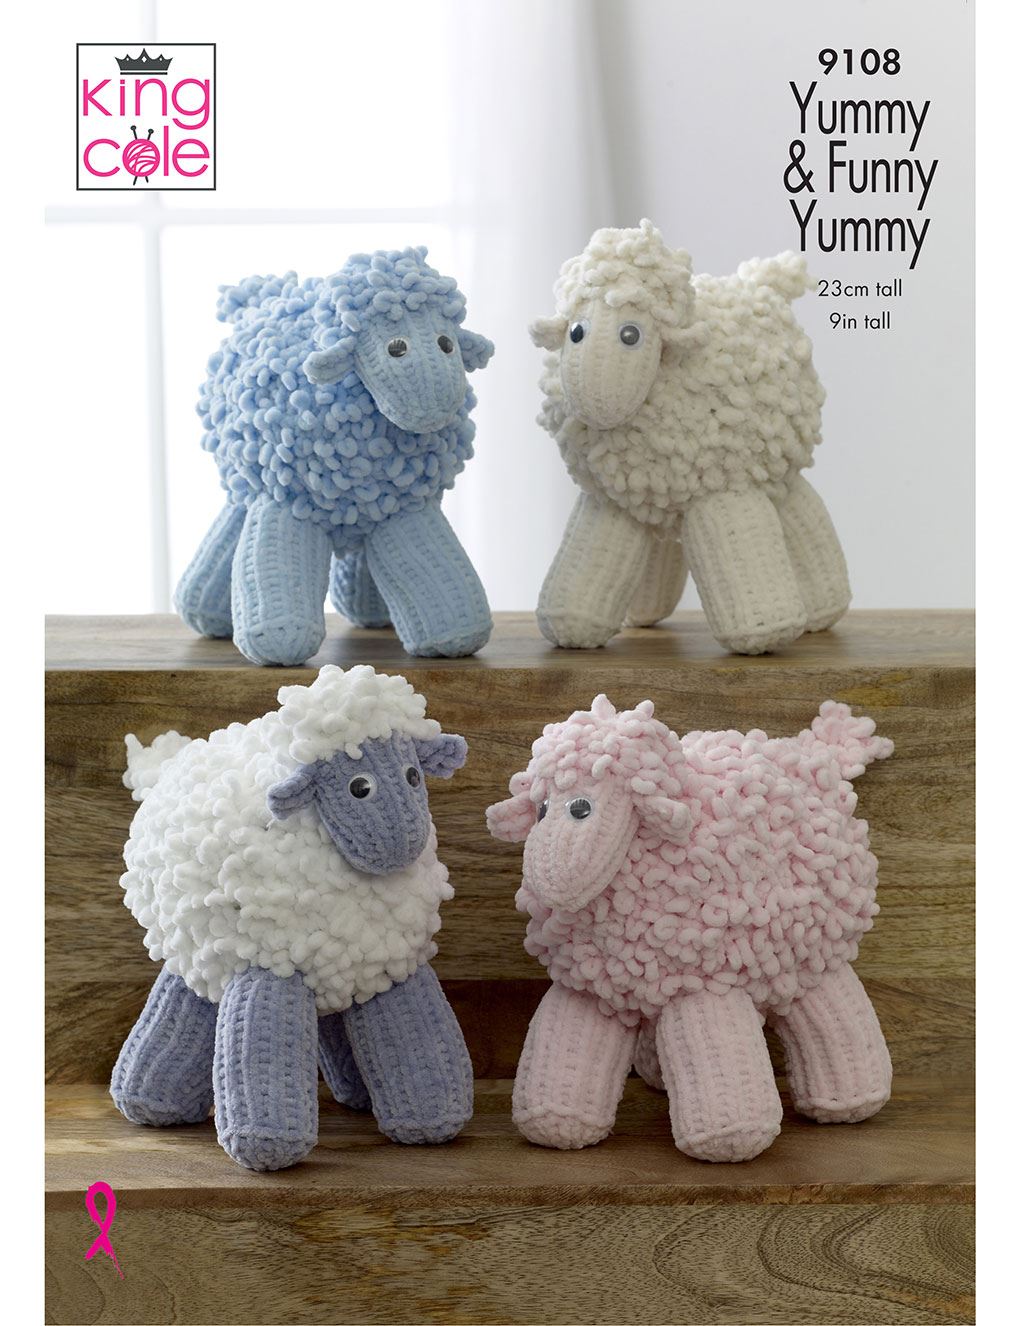 King Cole Funny Yummy knitting pattern (9108) sheep